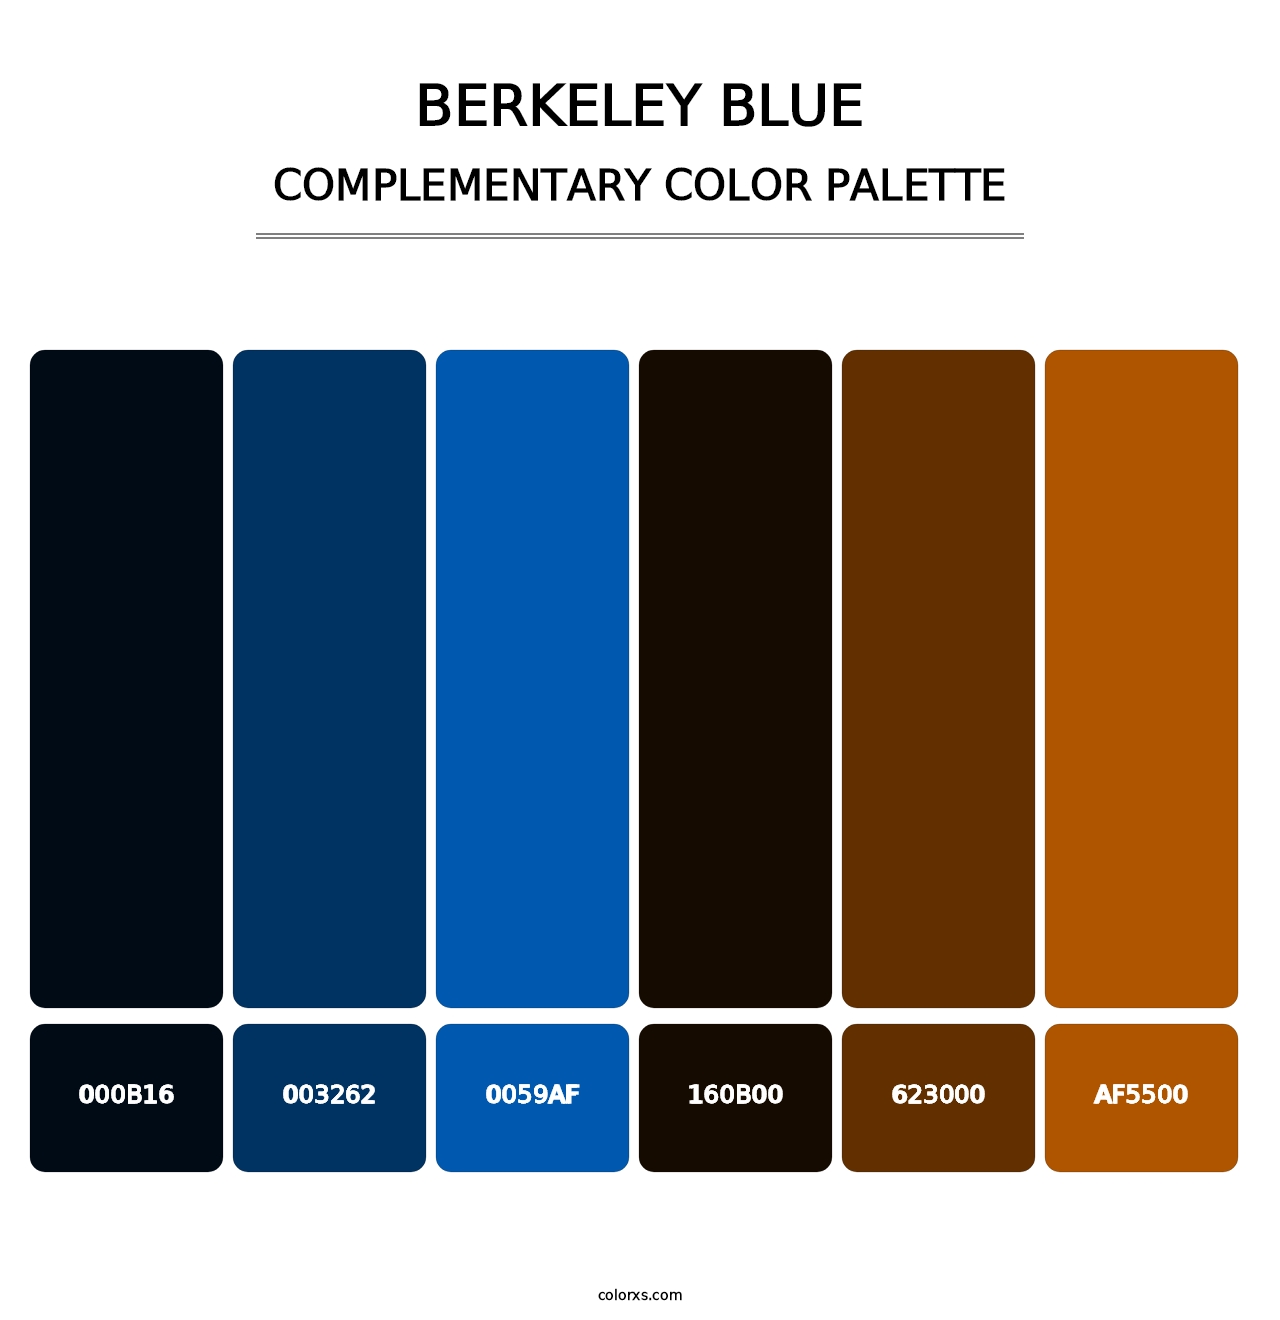 Berkeley Blue - Complementary Color Palette